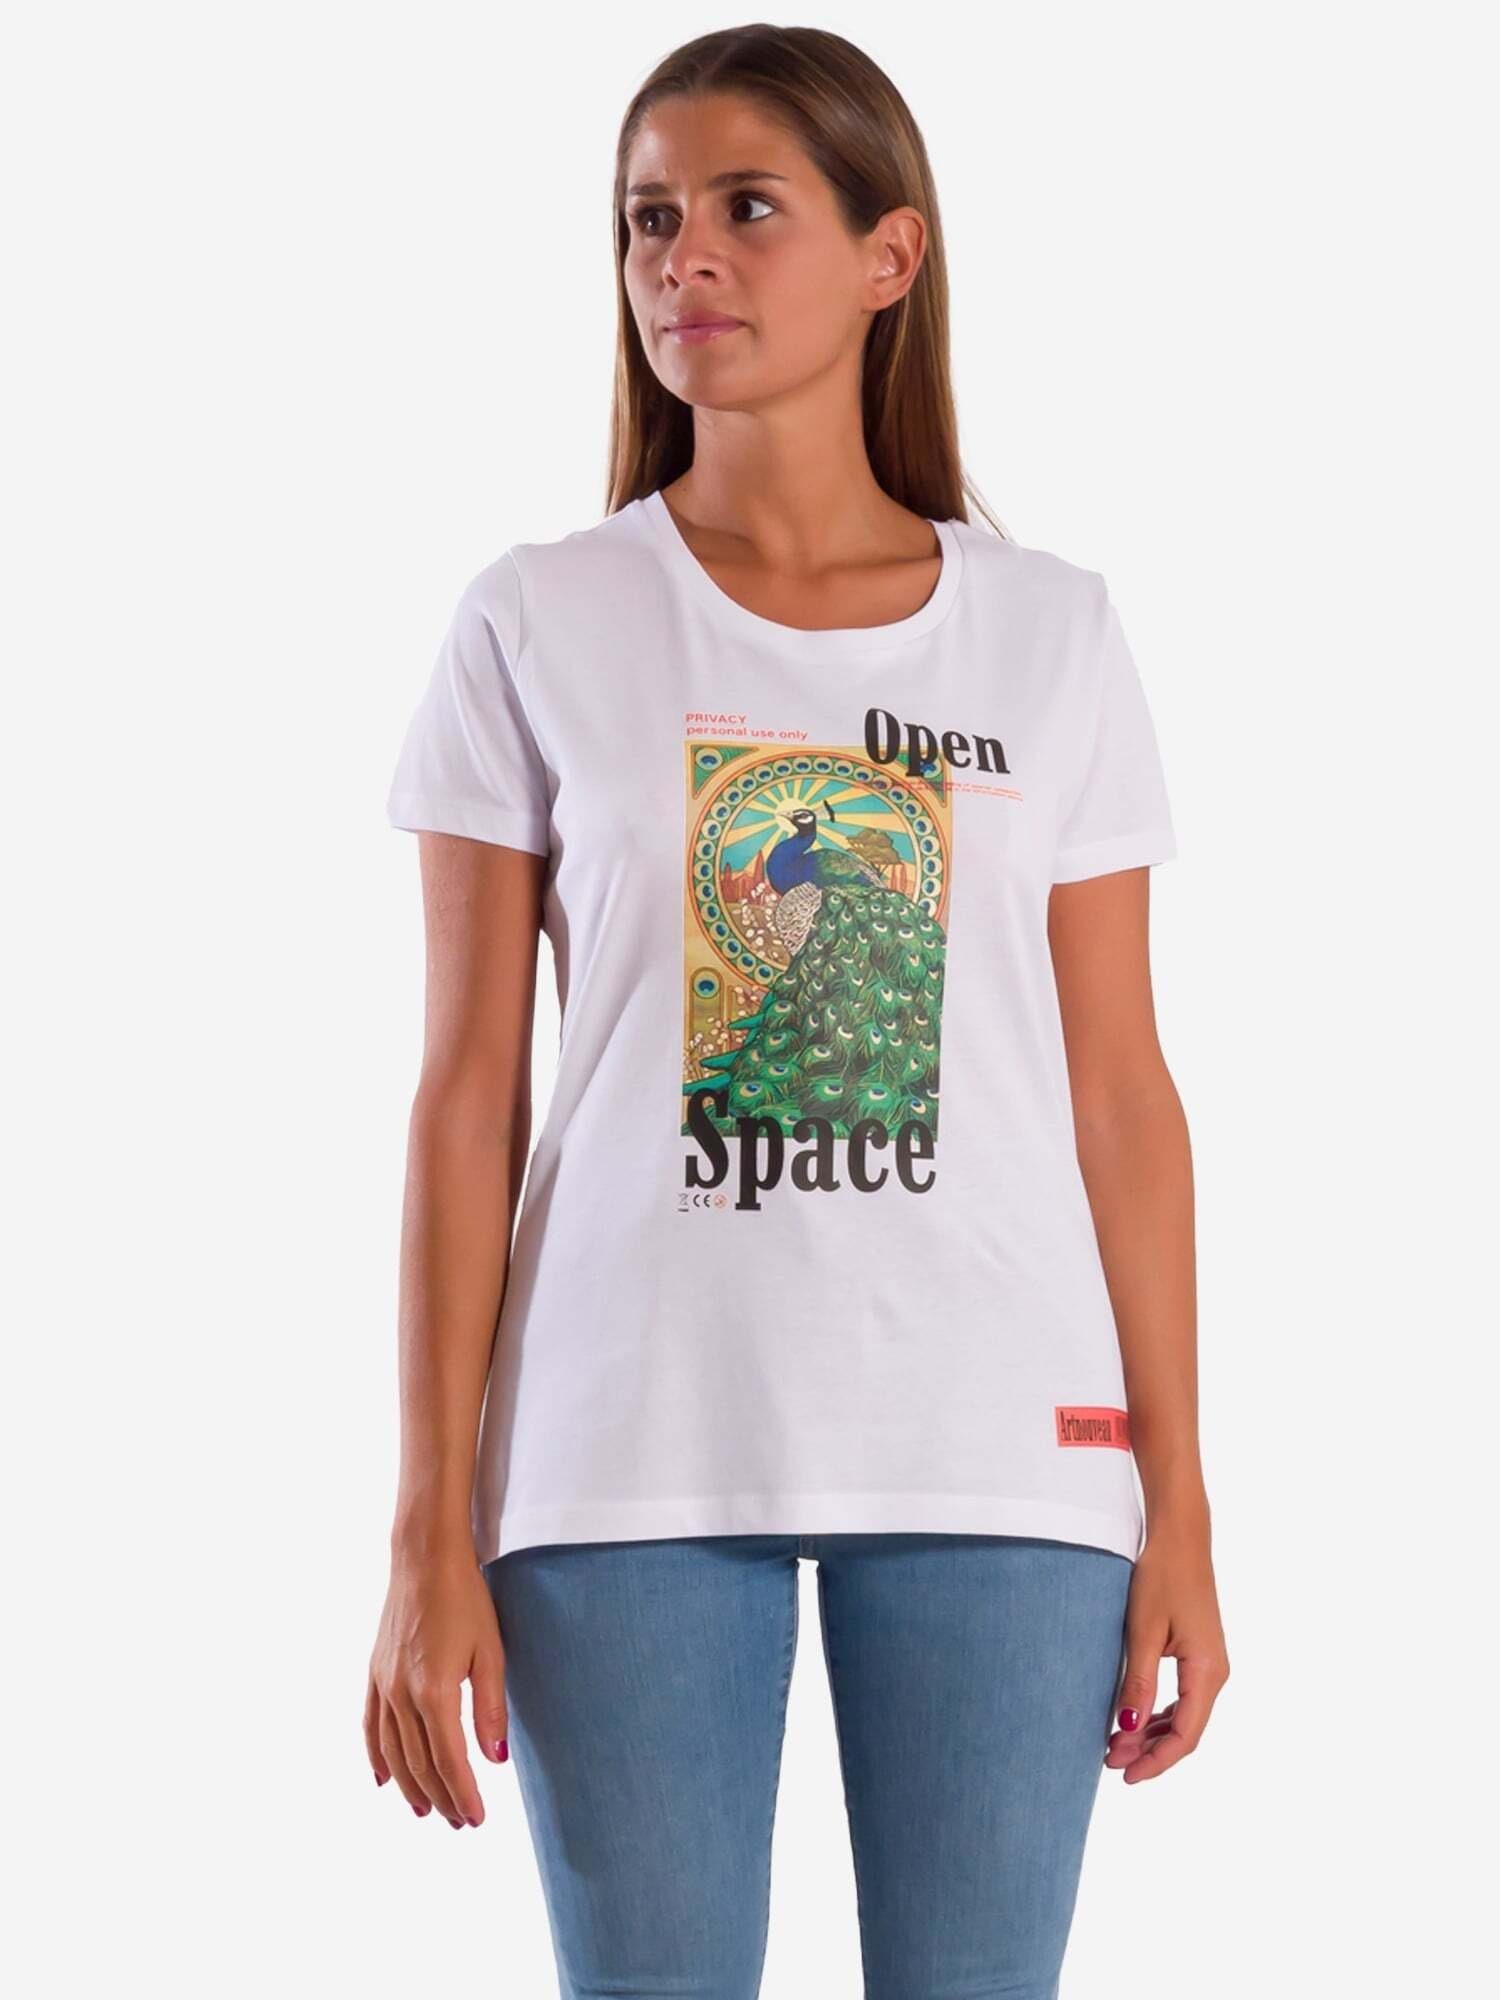 Openspace Print-Shirt | Rundhalsshirts